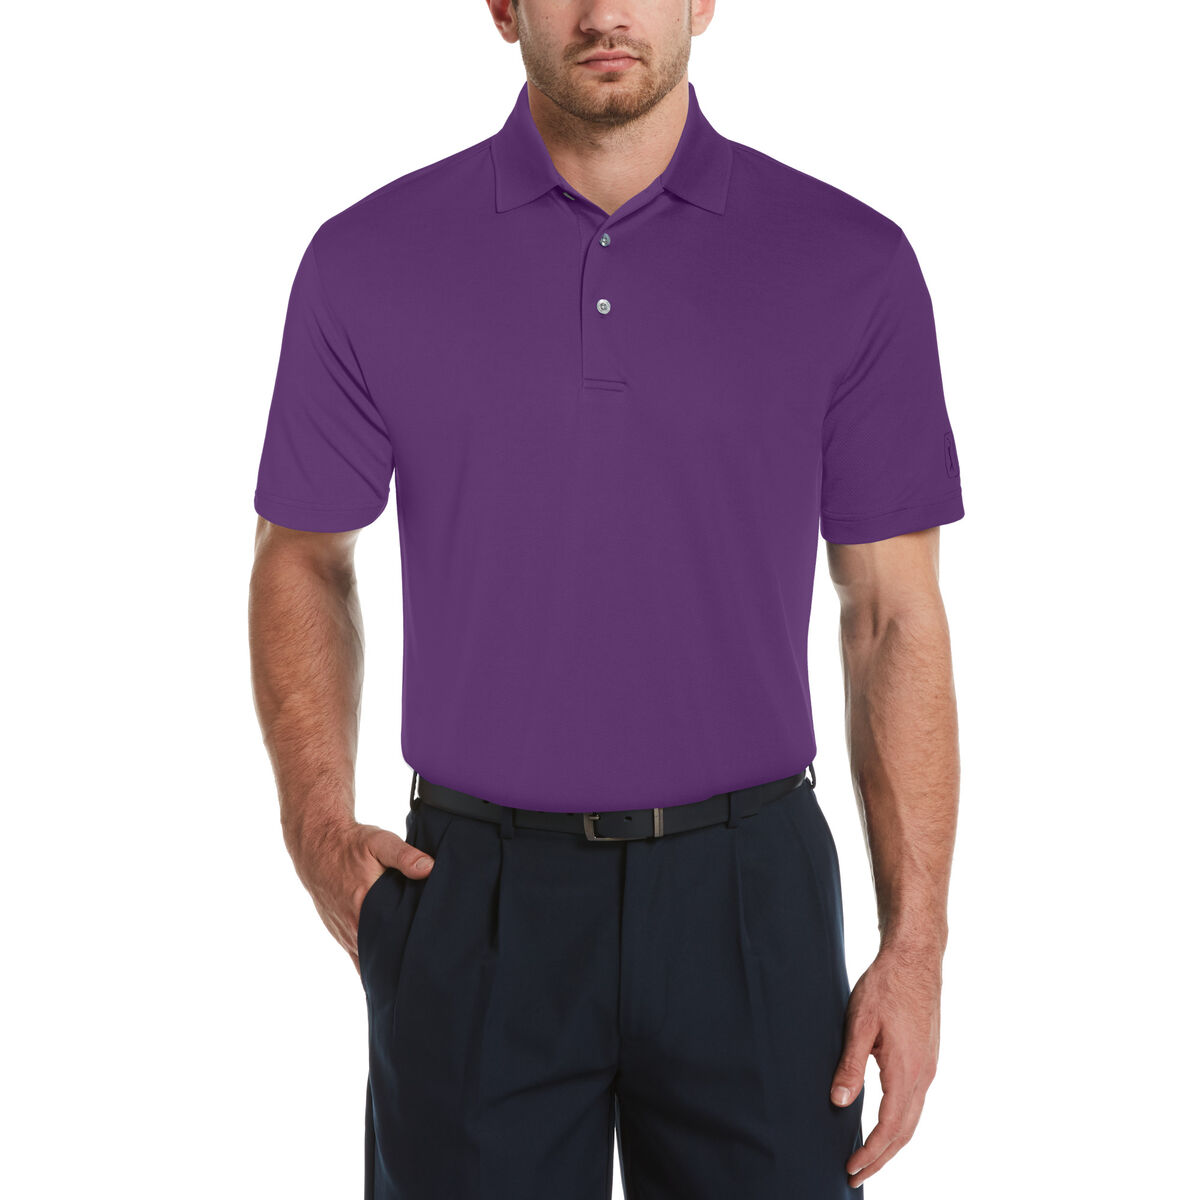 woocommerce-673321-2209615.cloudwaysapps.com-pga-tour-mens-purple-airflux-mesh-short-sleeves-golf-polo-shirt